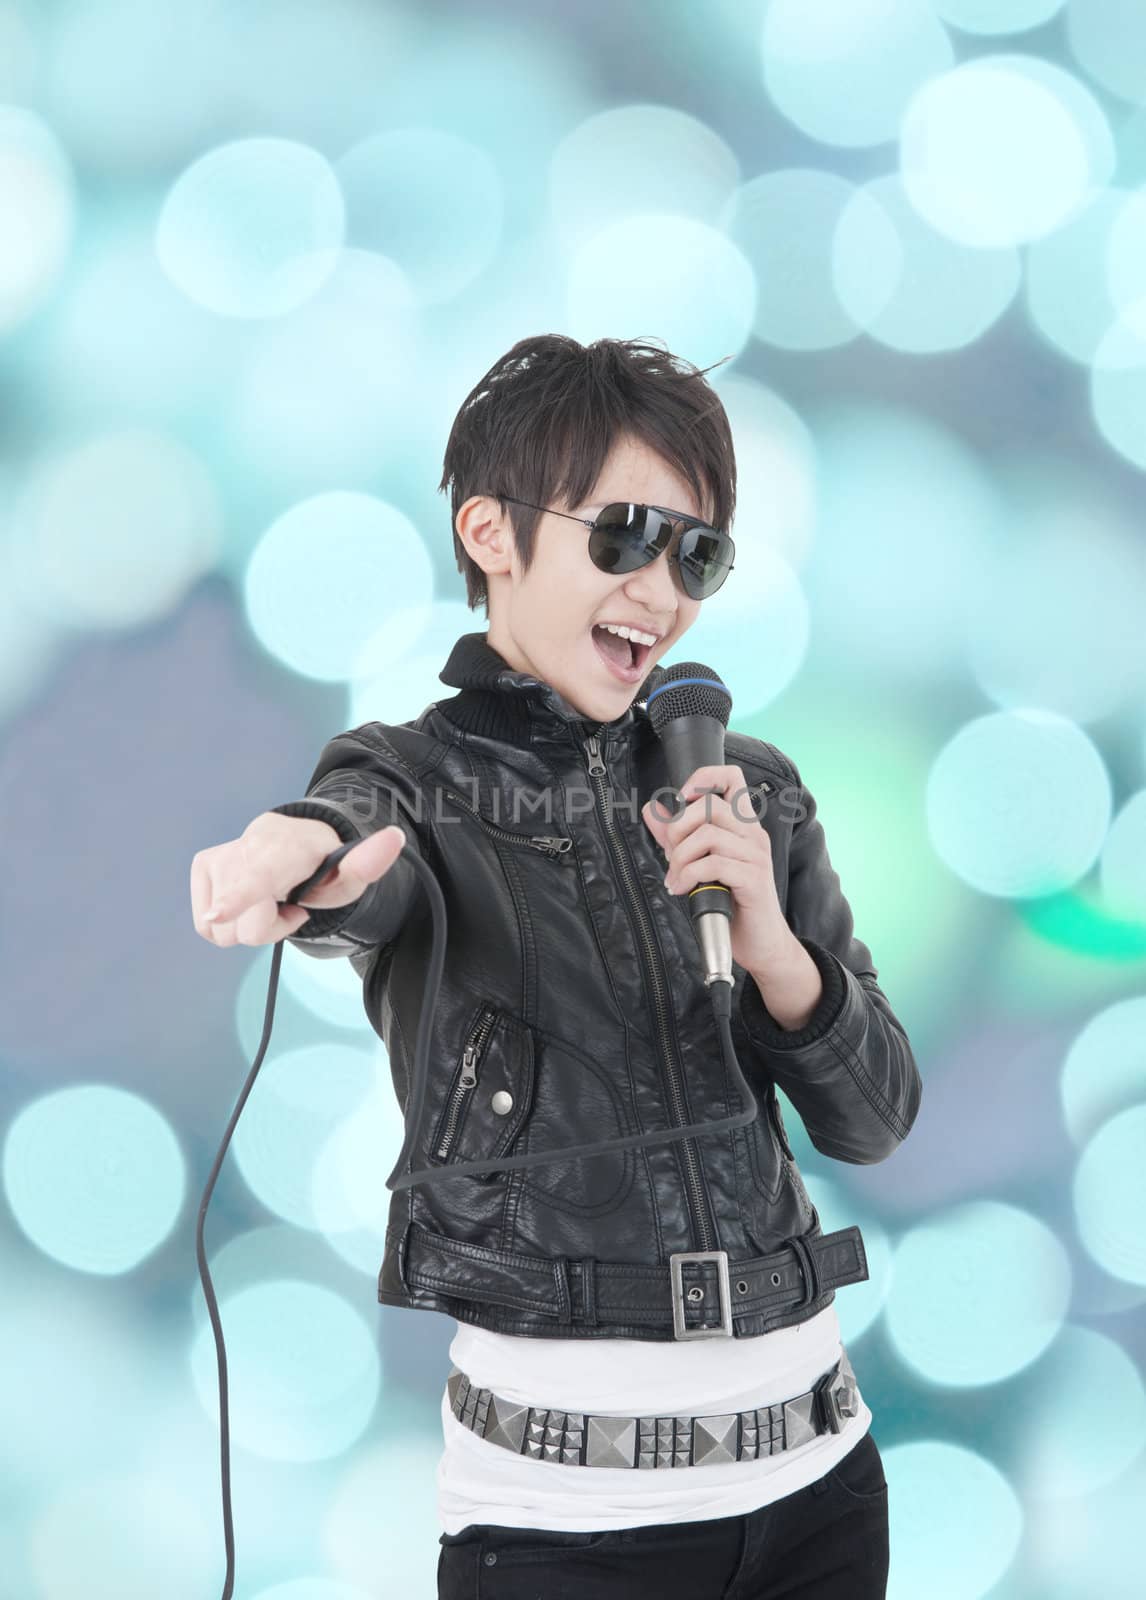 asian rock star by yuliang11